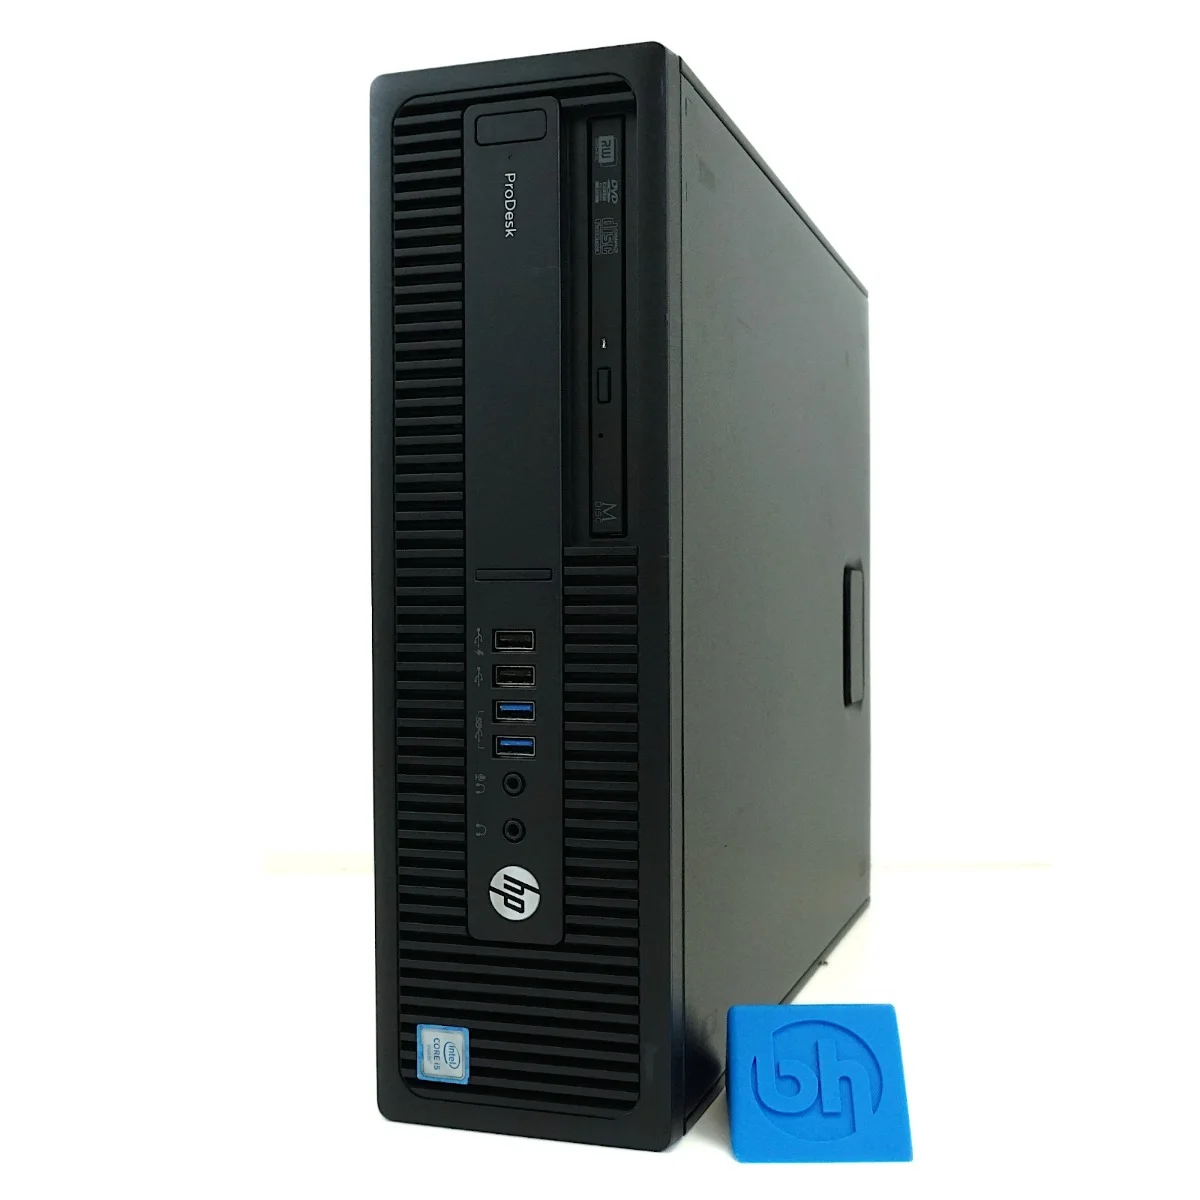 HP ProDesk 600 G2 SFF Desktop PC